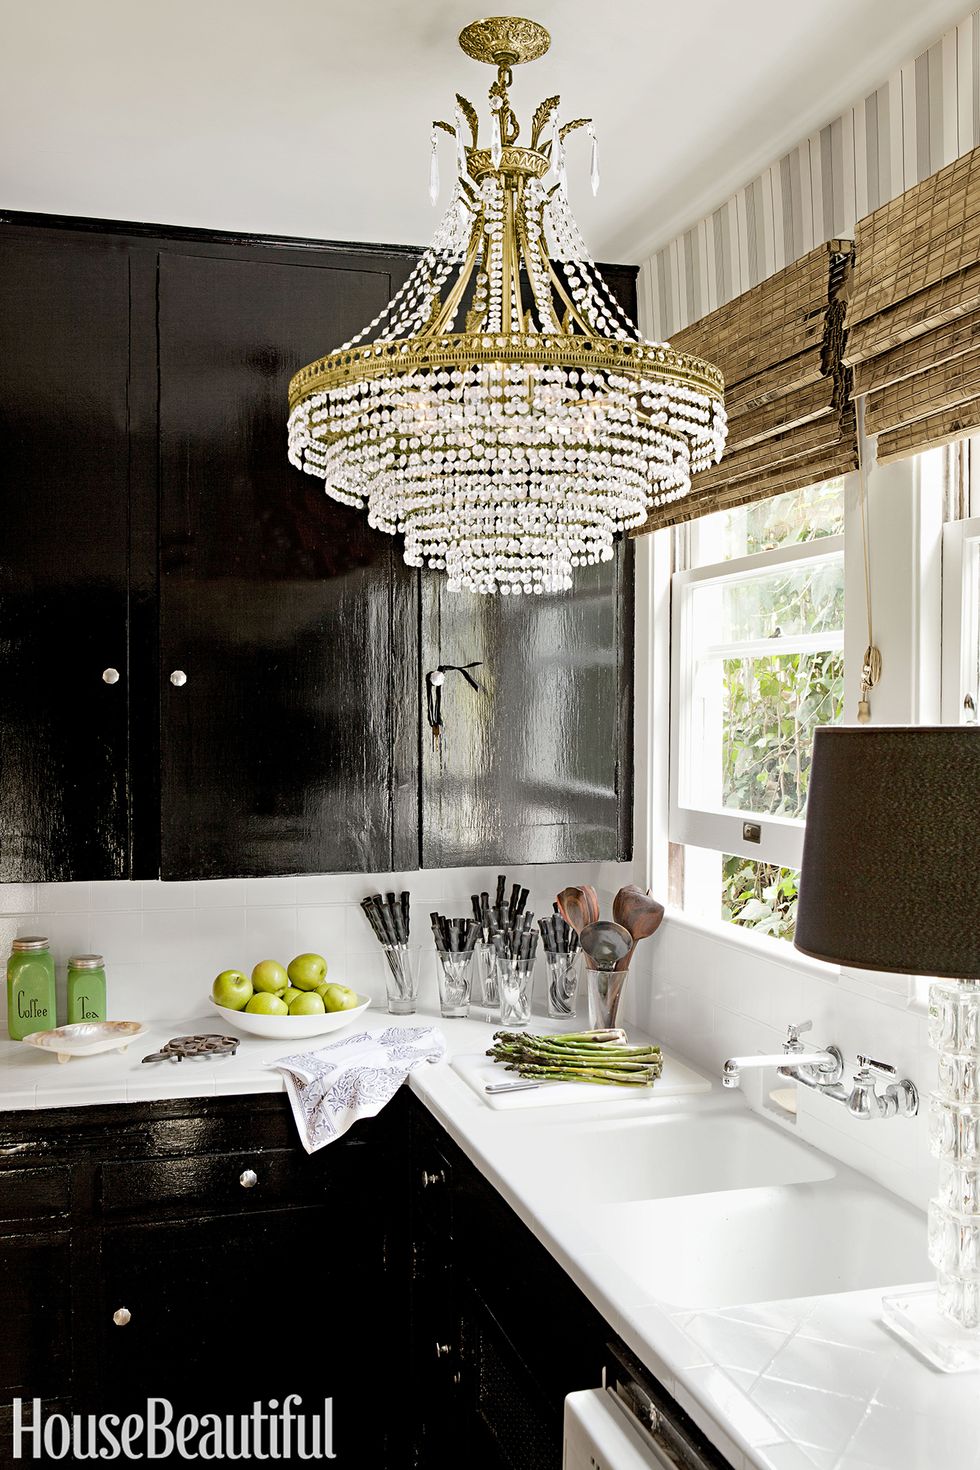 Amazing Black and White Kitchen Decor Ideas